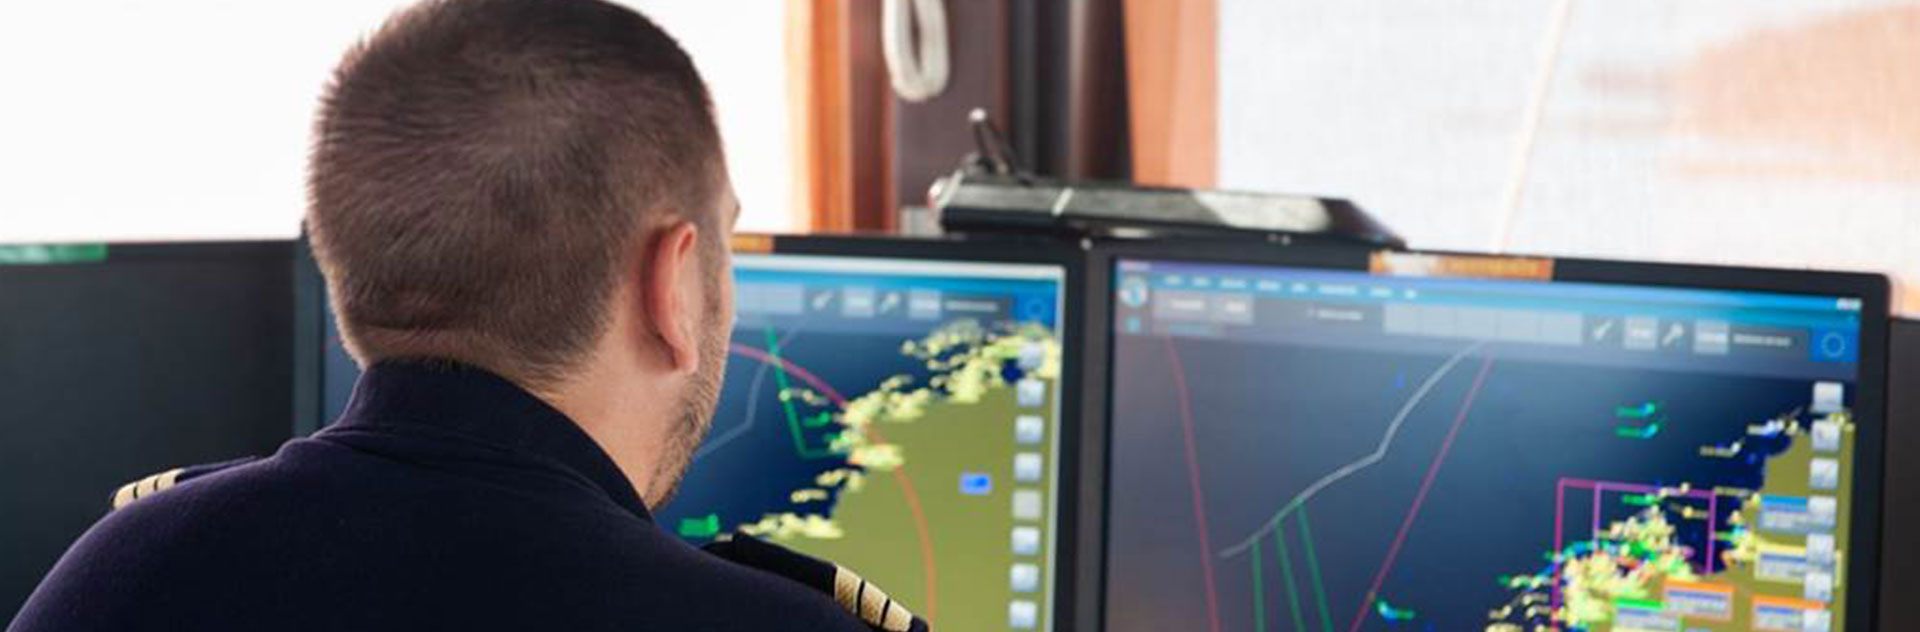 Spationav enables safer maritime operations